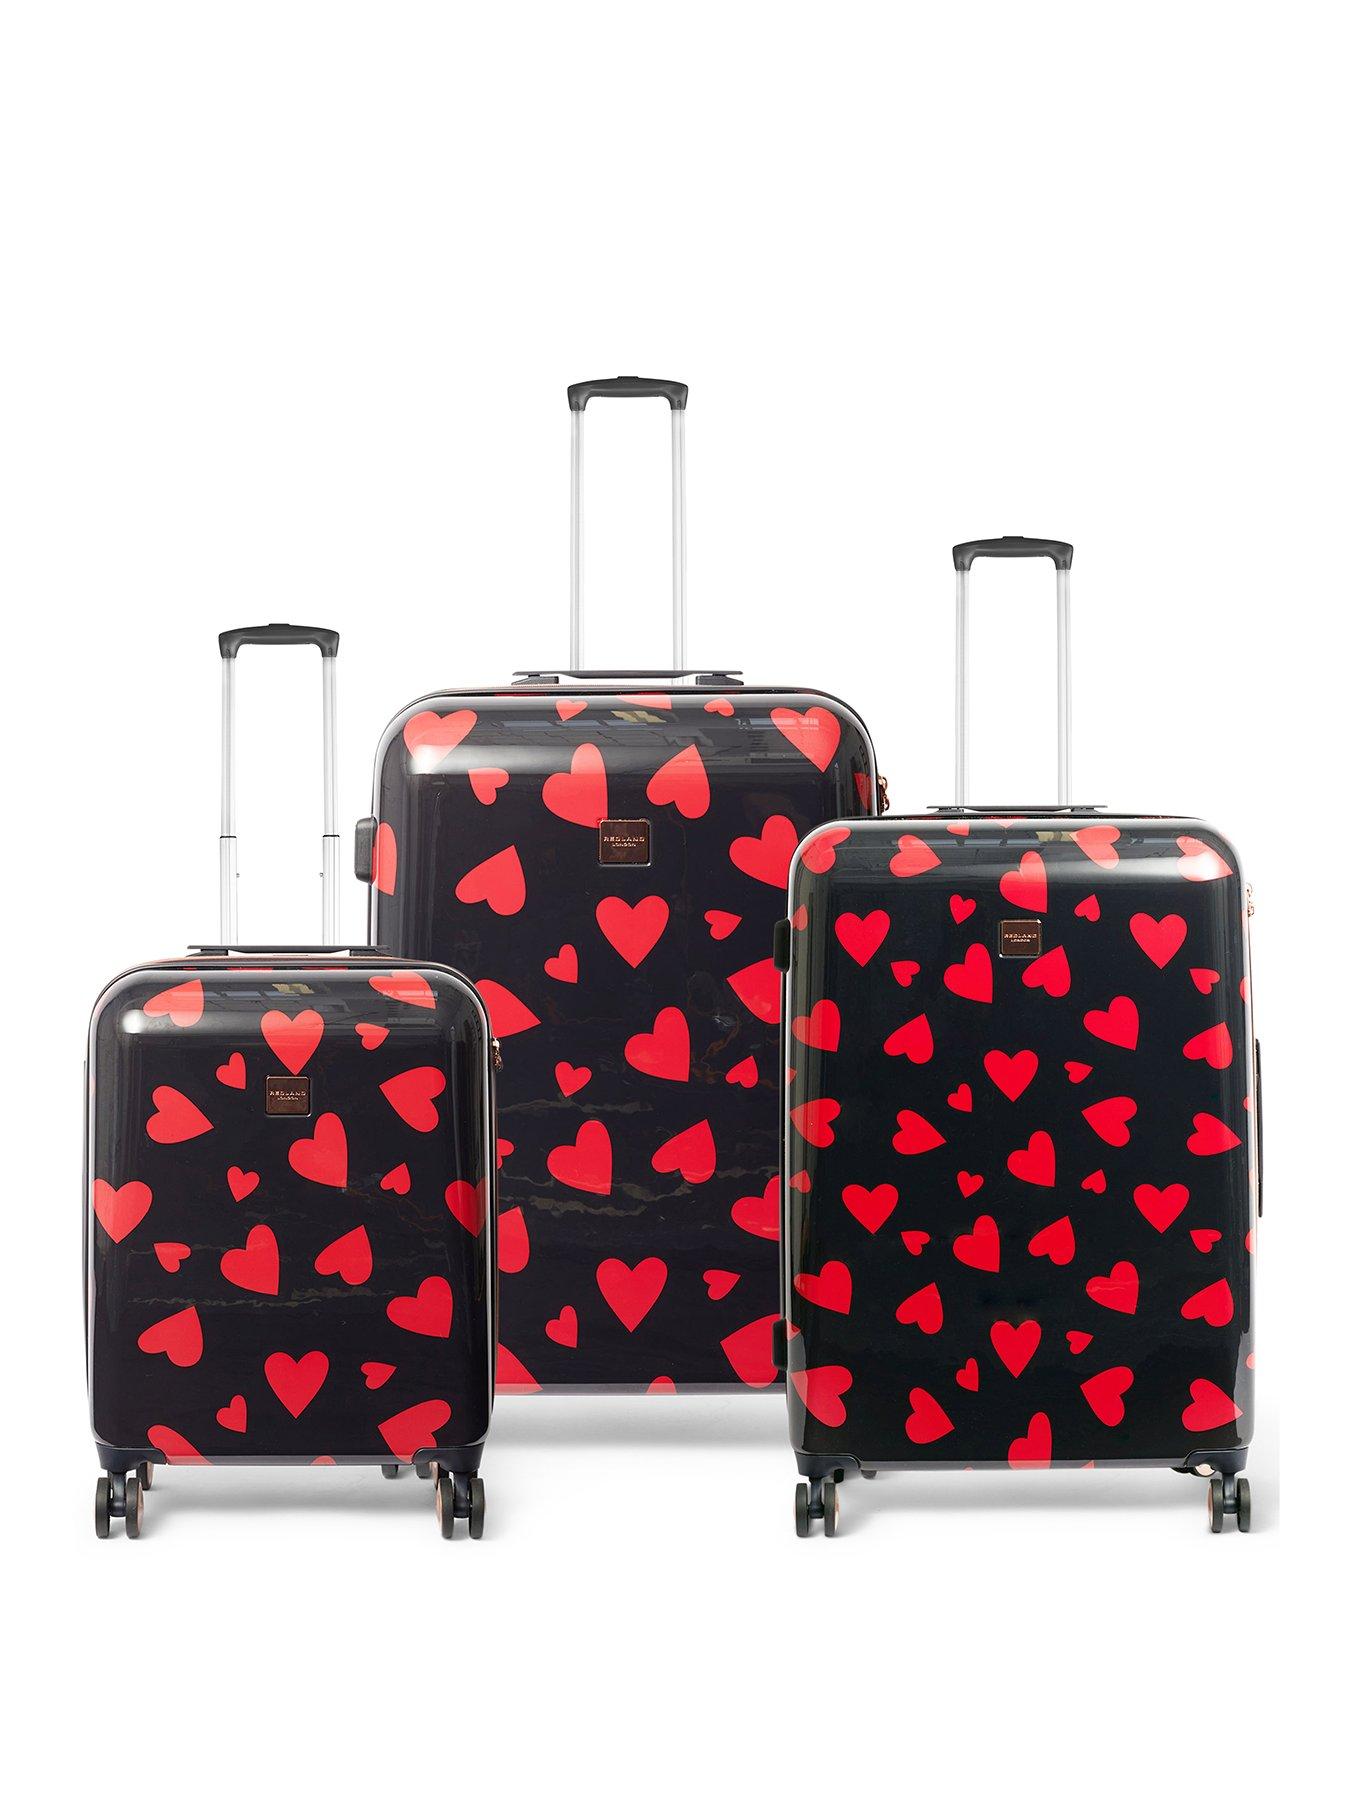 Black Luggage X 66cm 26 Suitcase Medium Lightweight Hard Shell 4 Spinner  Wheels